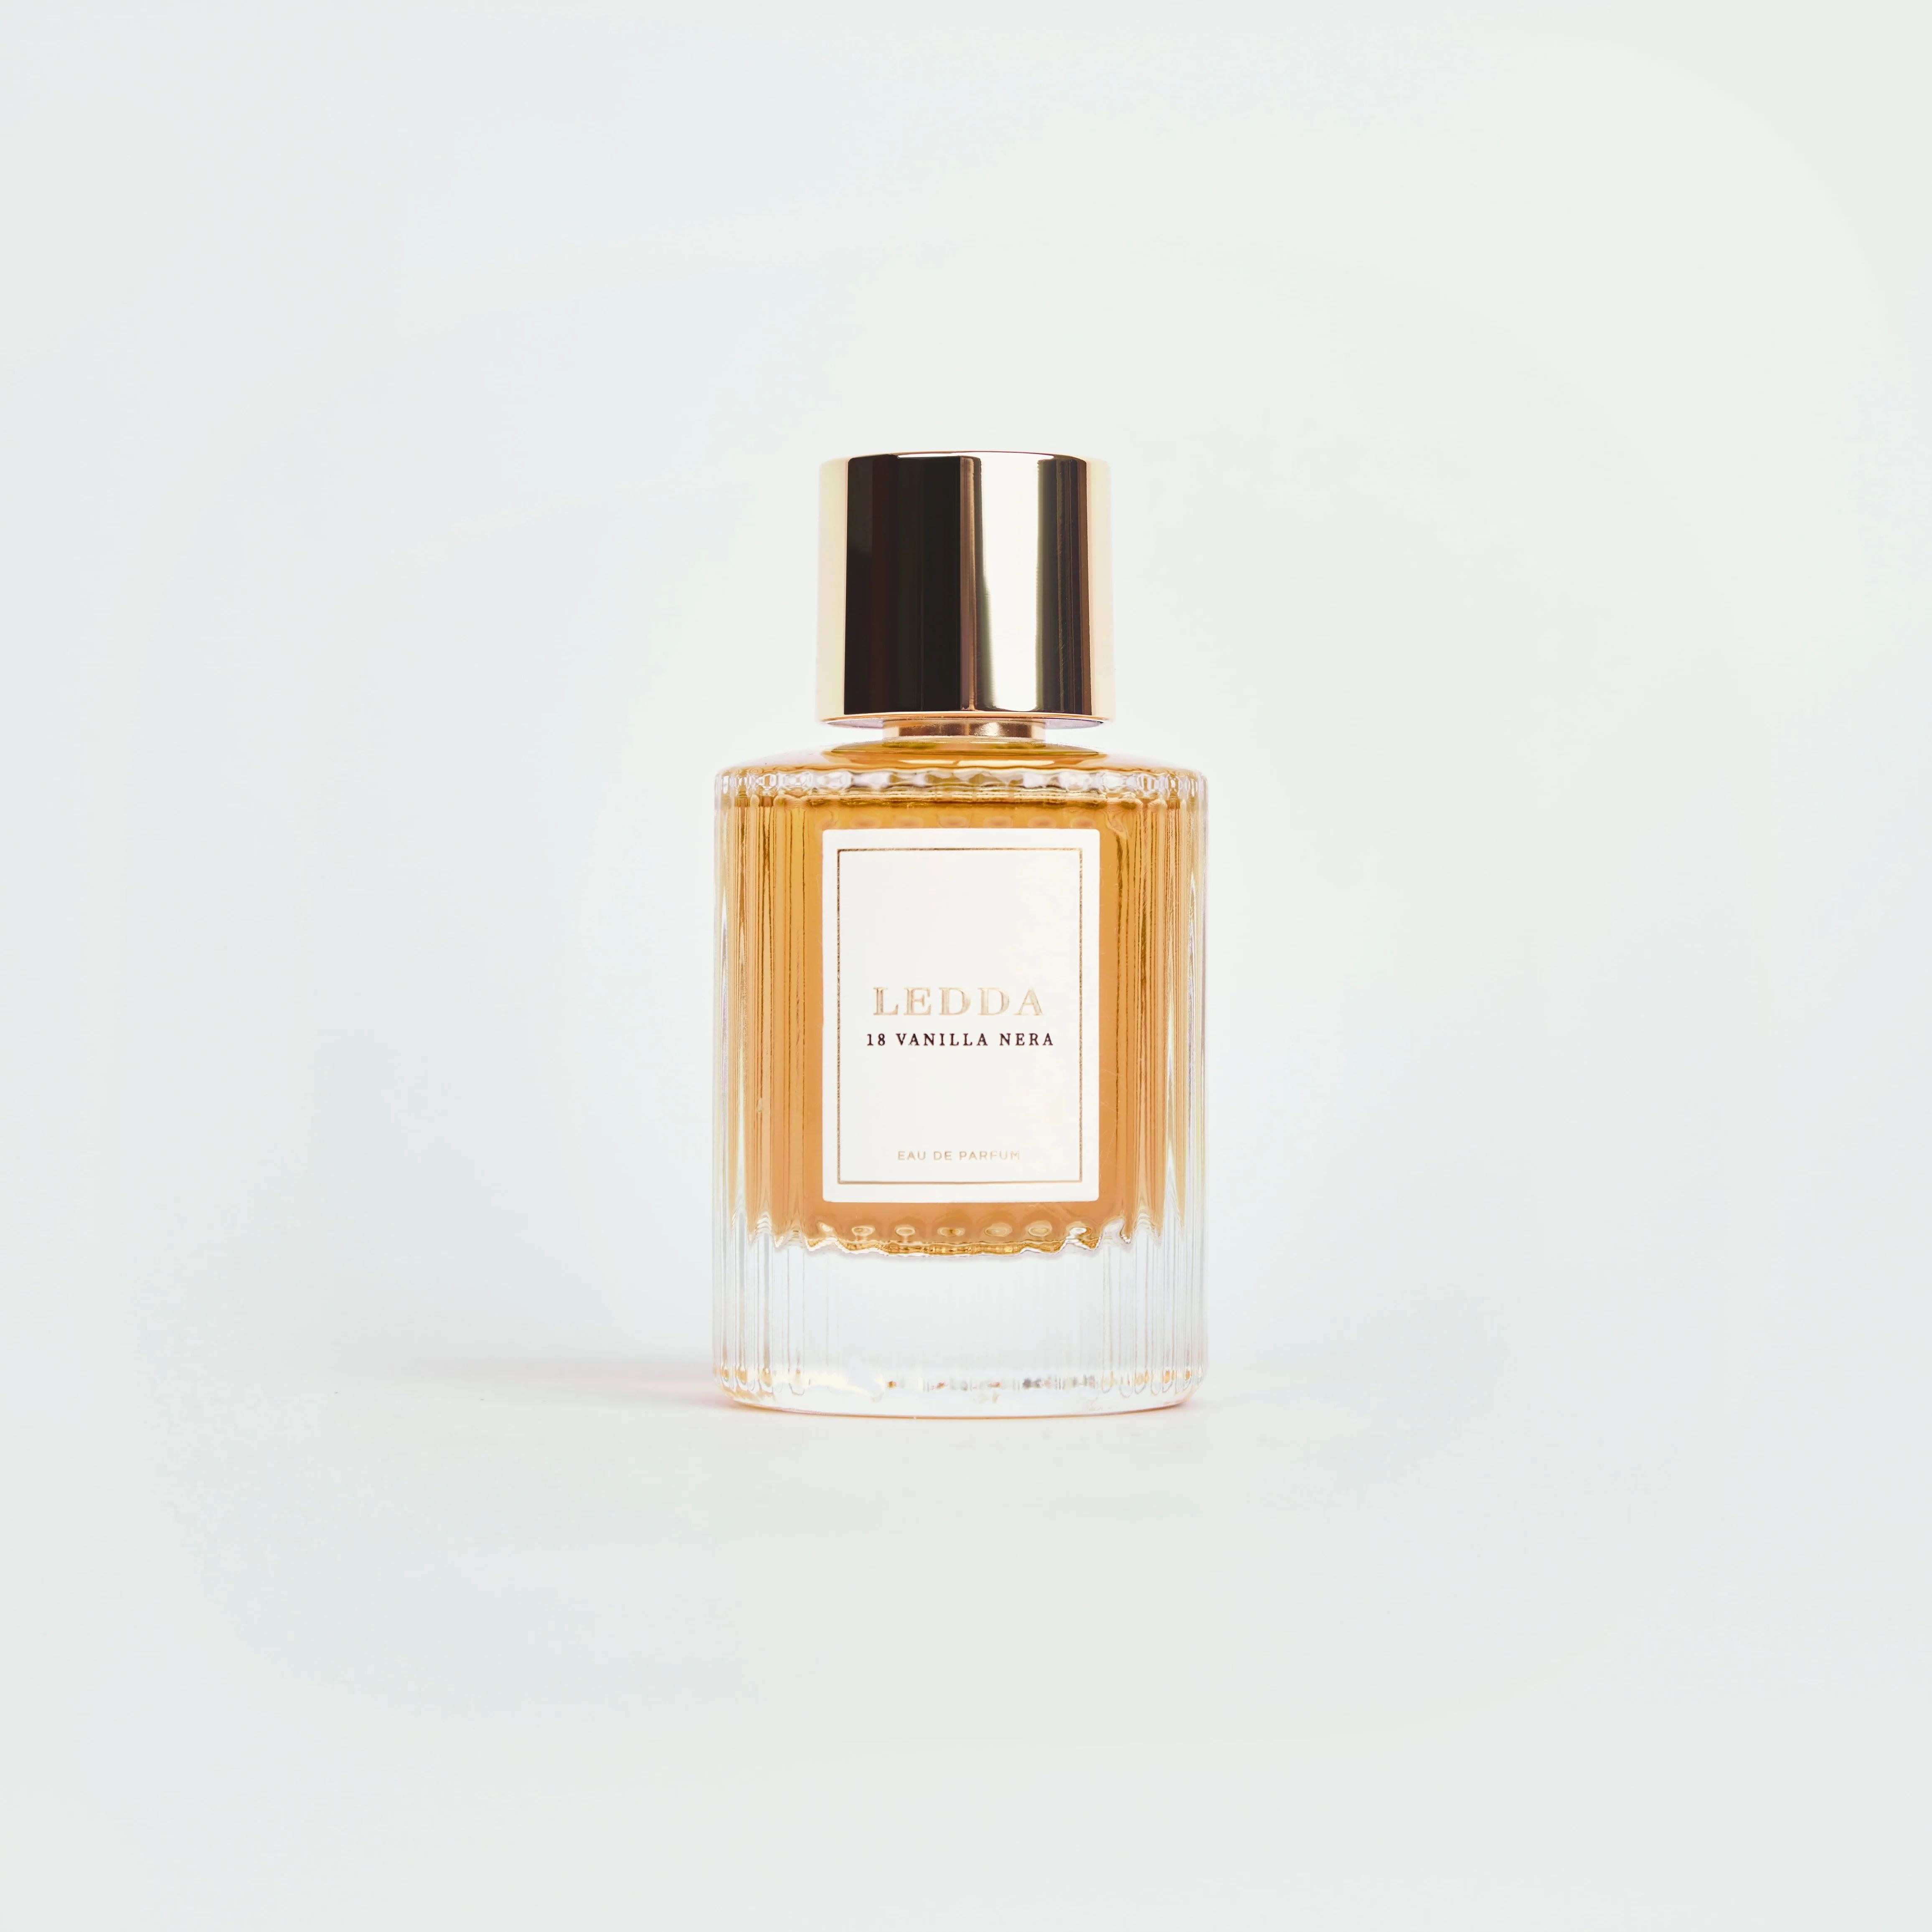 18 Vanilla Nera Eau De Parfum - 50 ml - LEDDA | LEDDA (US)